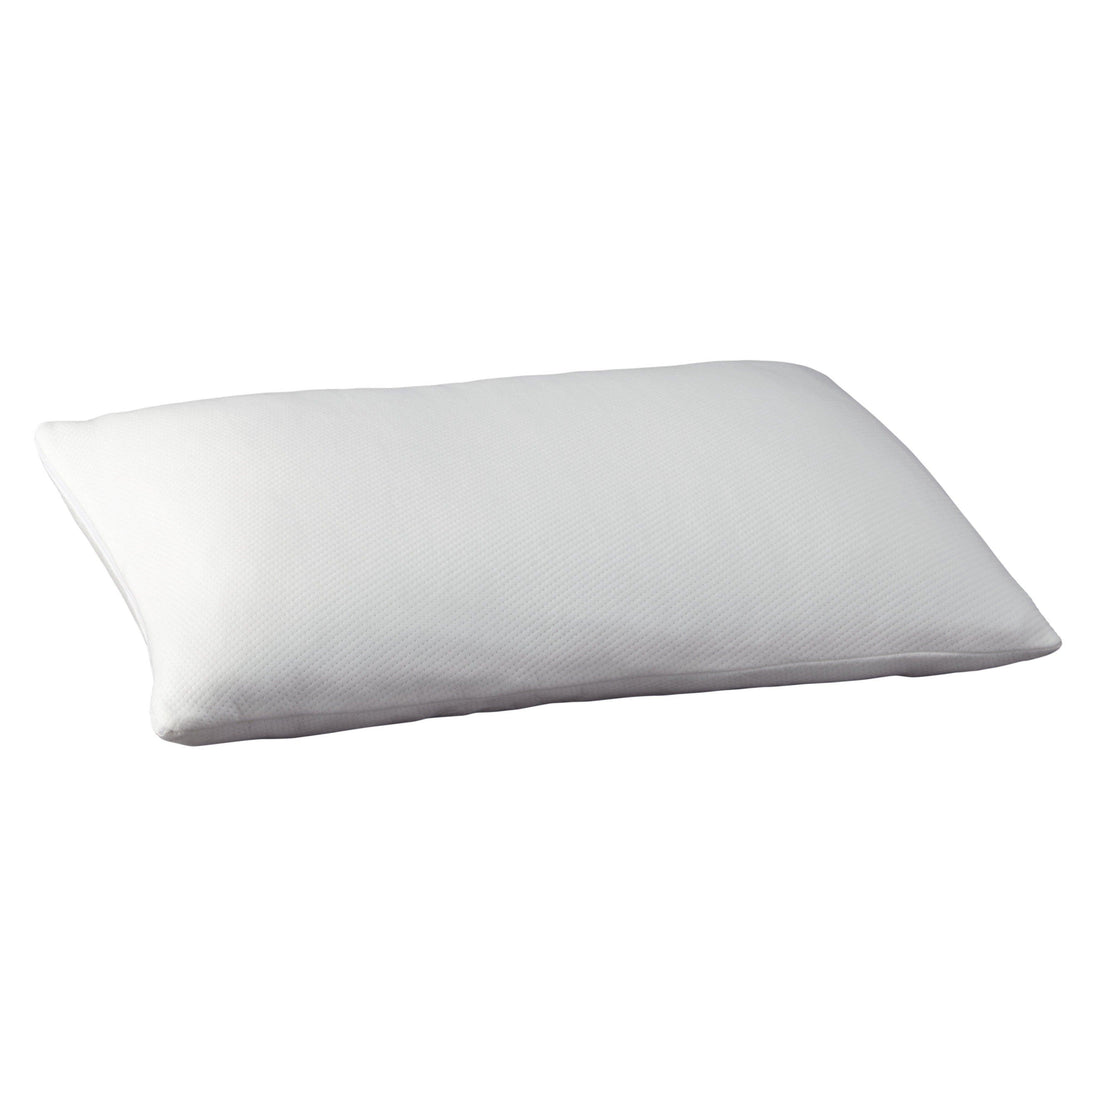 Promotional Memory Foam Pillow Ash-M82510P